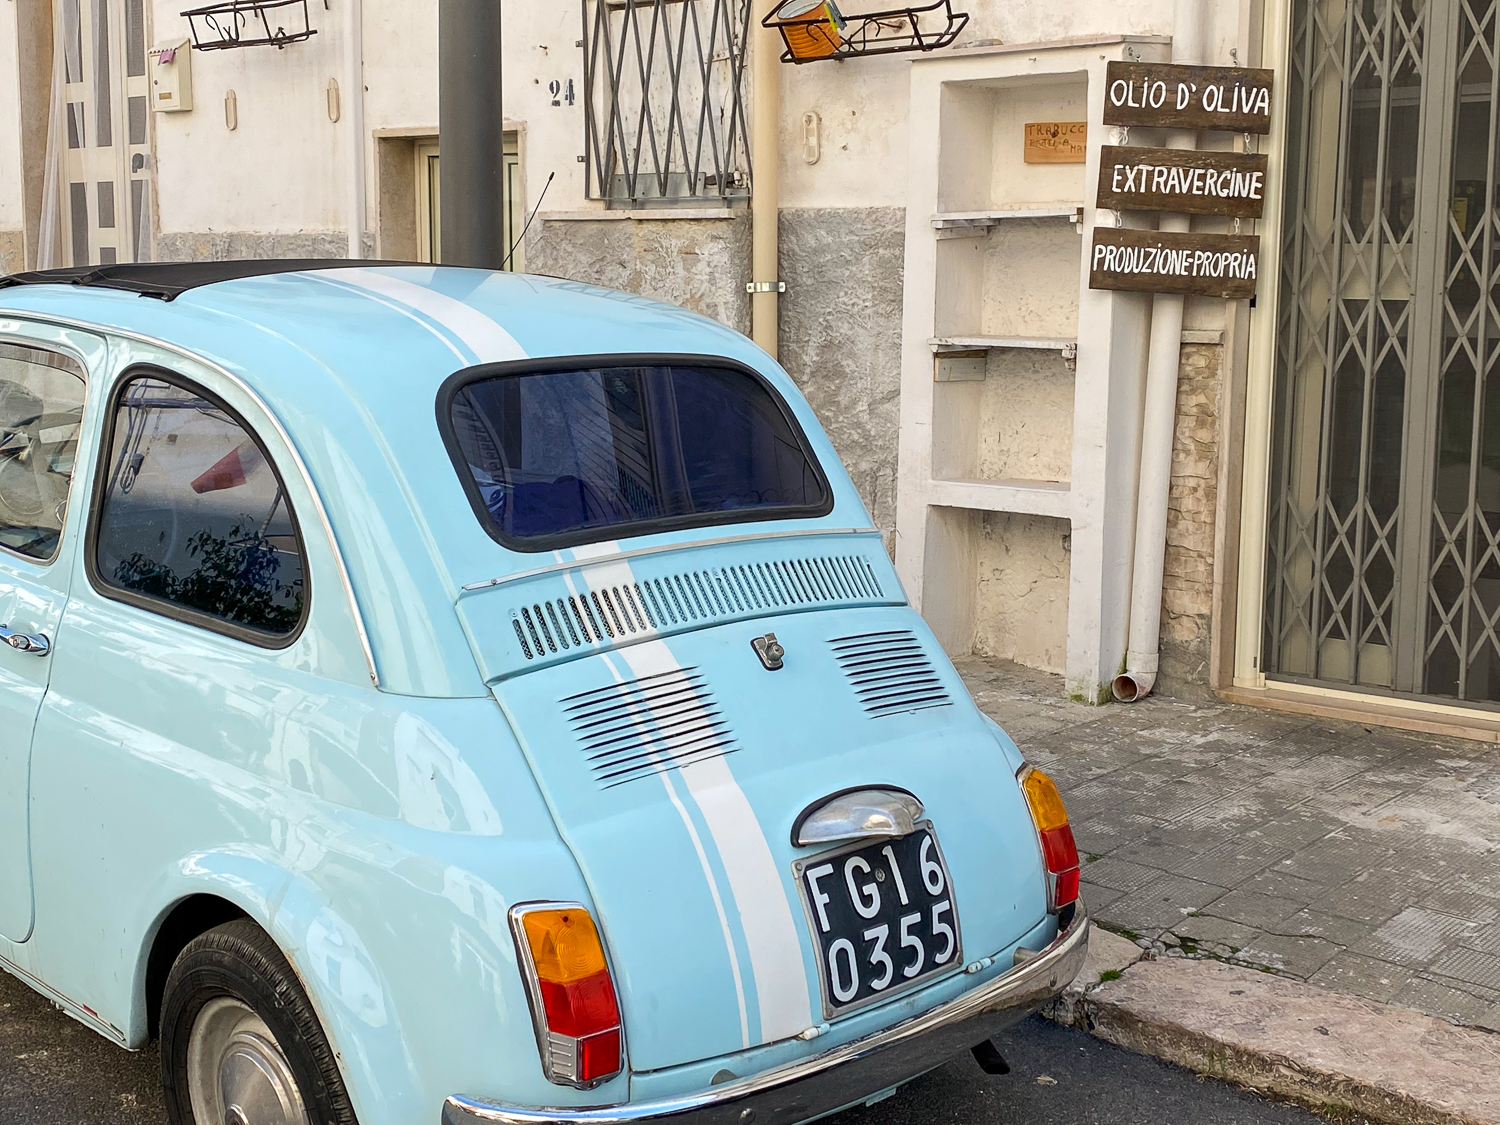 Light-blue car parked on a street in Peschici